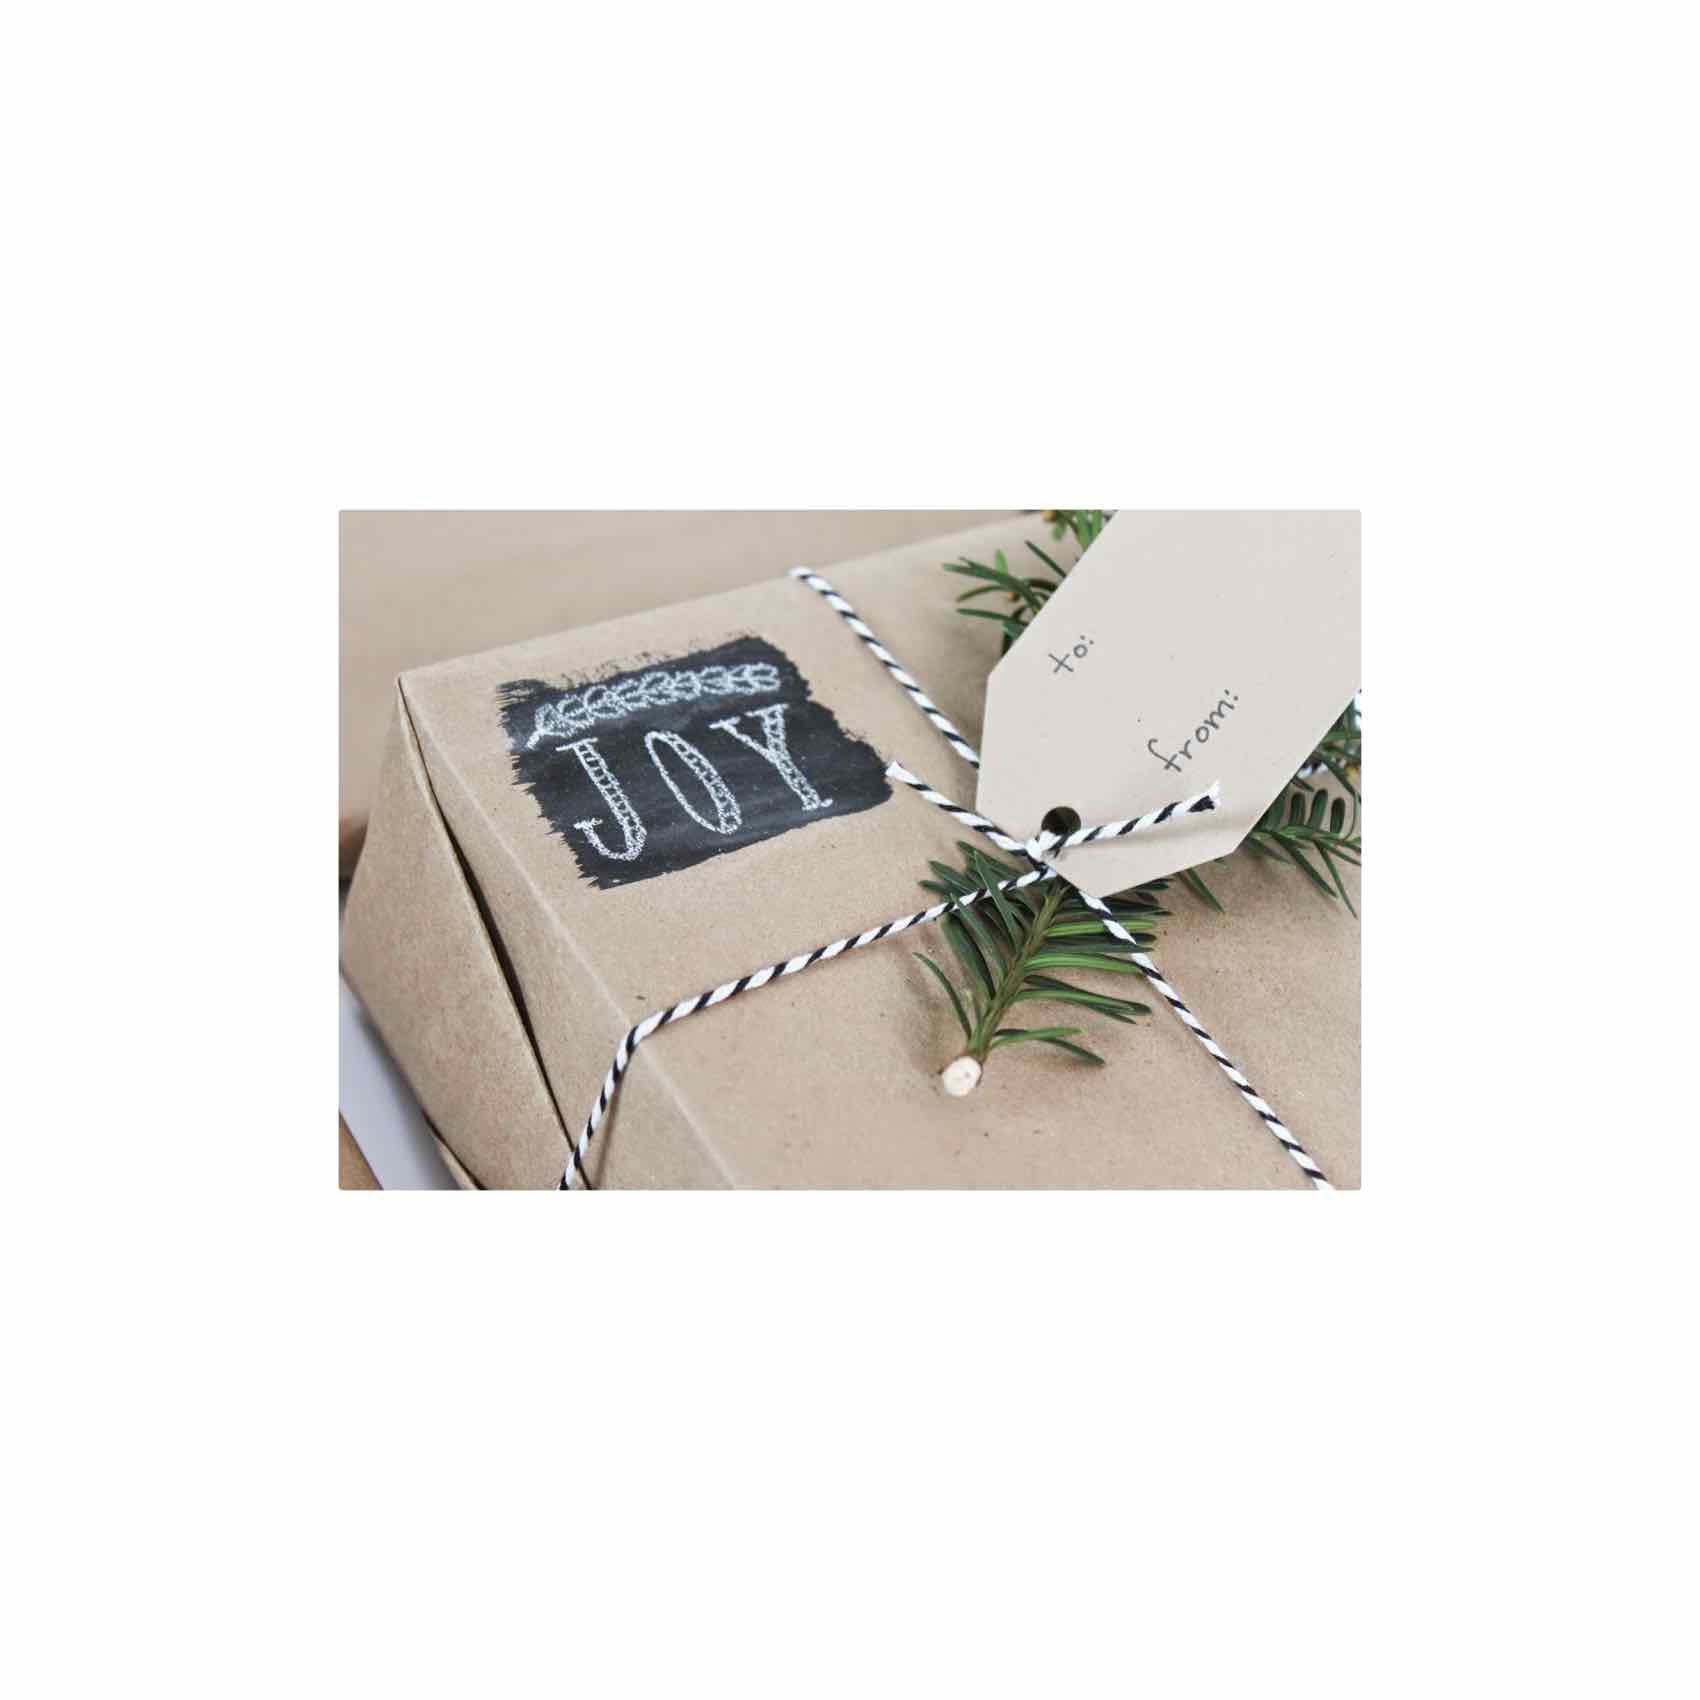 Homemade Gift Box Ideas - Melissa's Crafting Treehouse % %